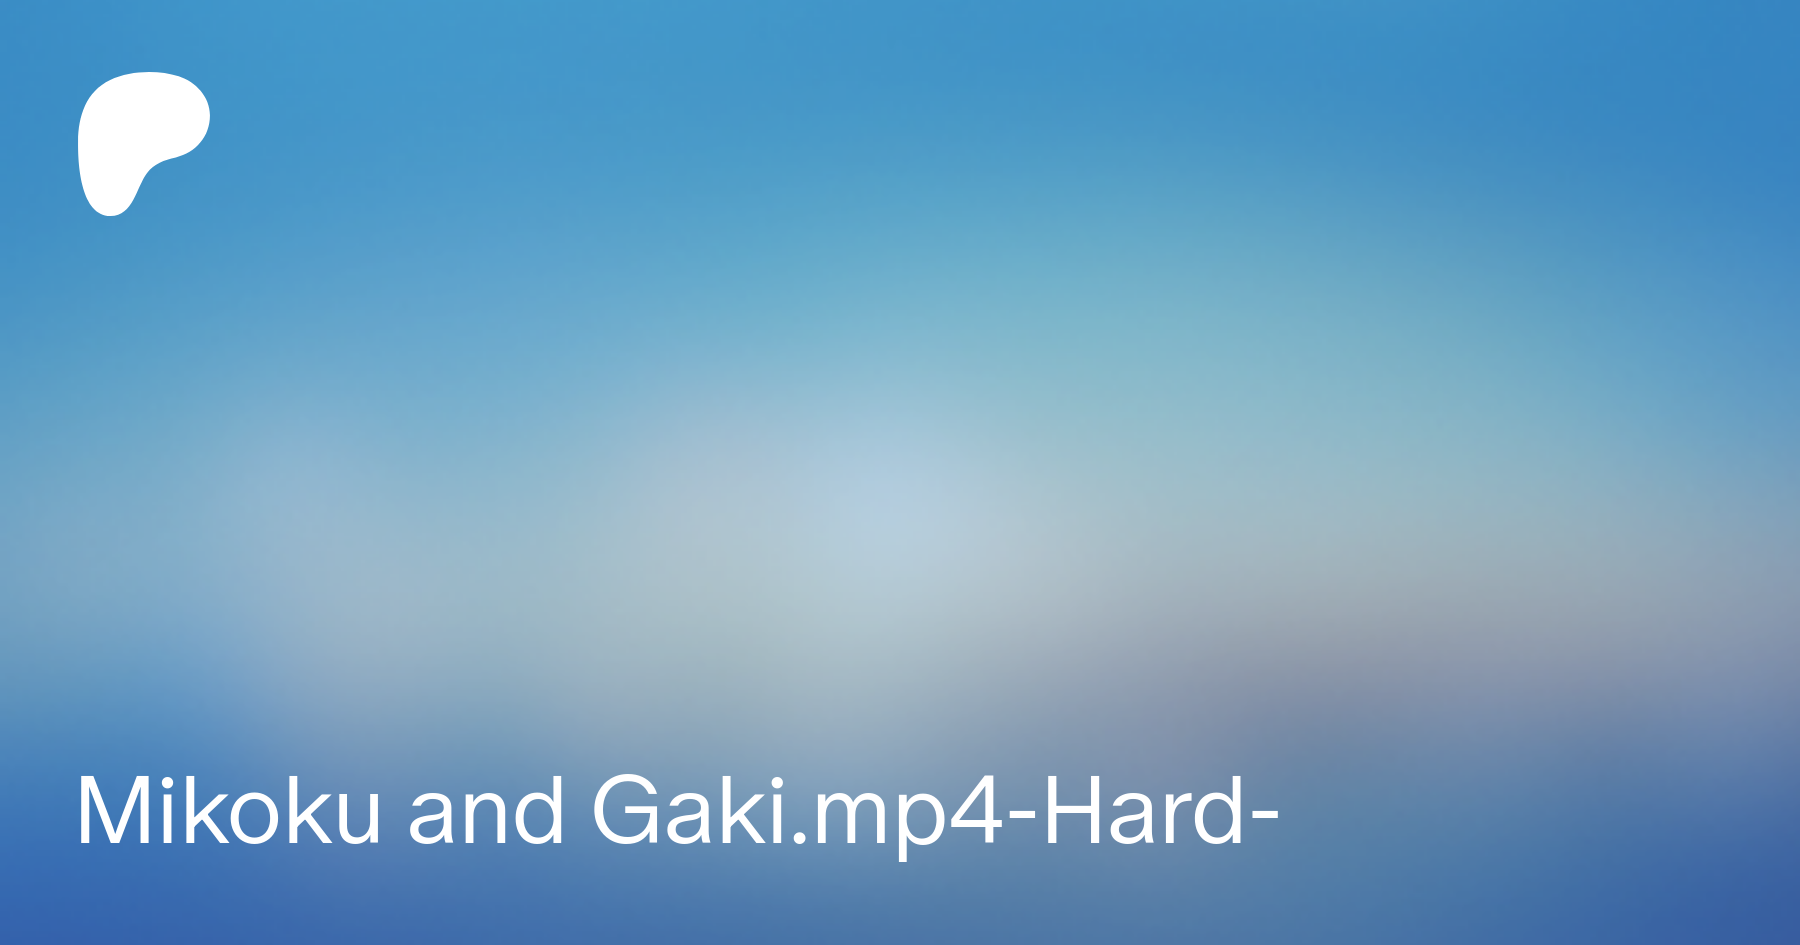 Mikoku and Gaki.mp4-Hard- | Patreon